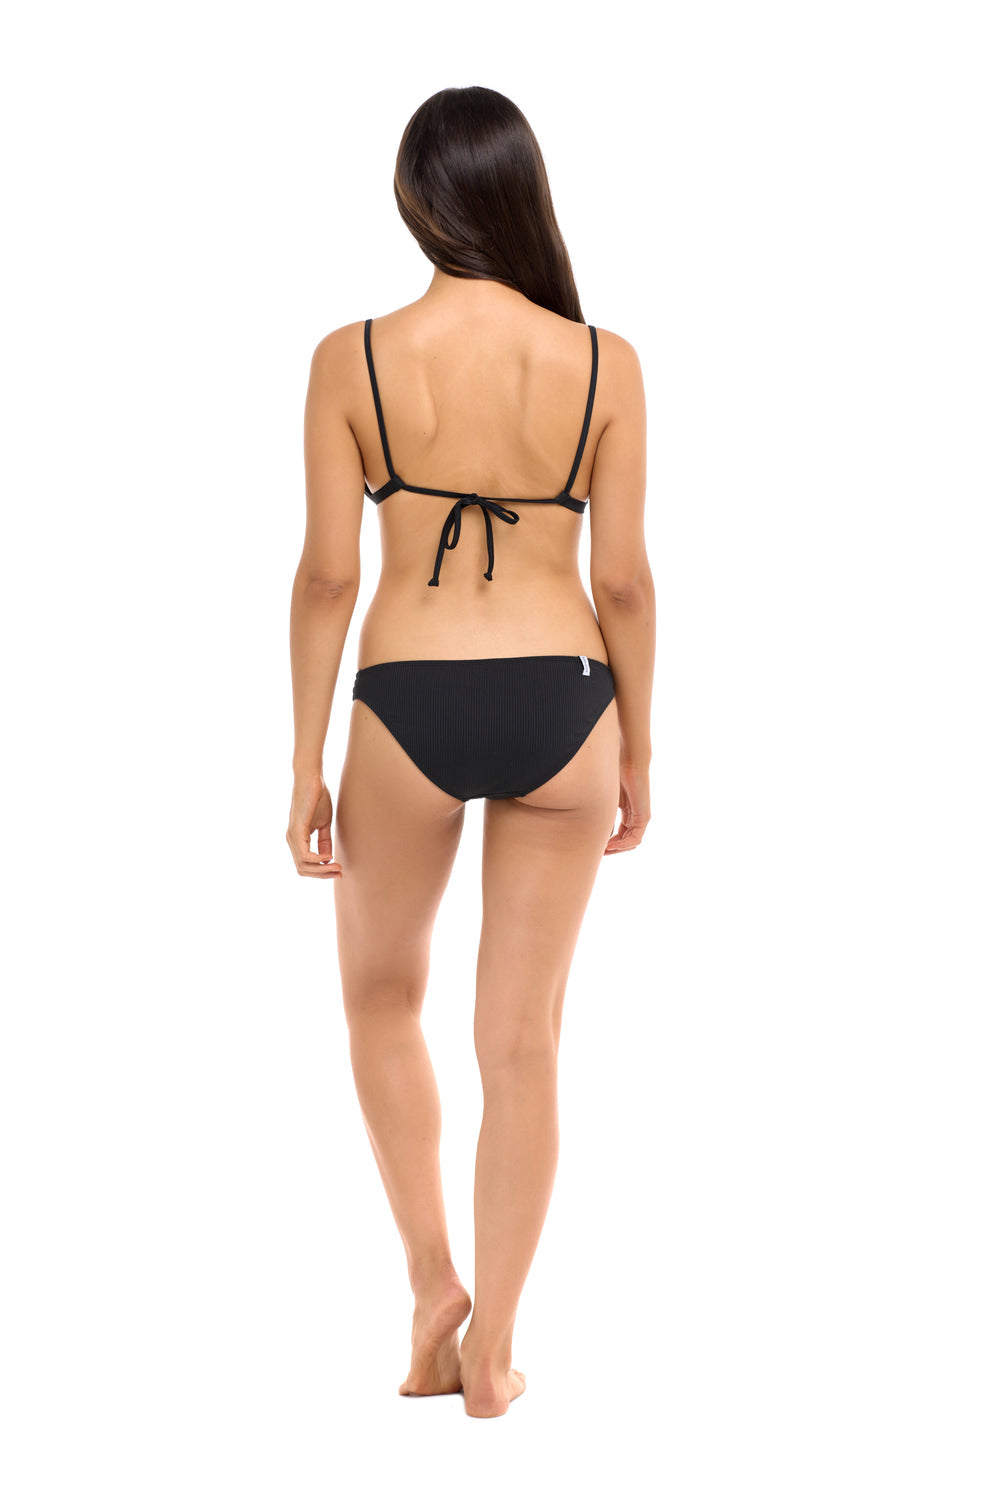 Body Glove Ibiza Evelyn Fixed Triangle Bikini Top - Black